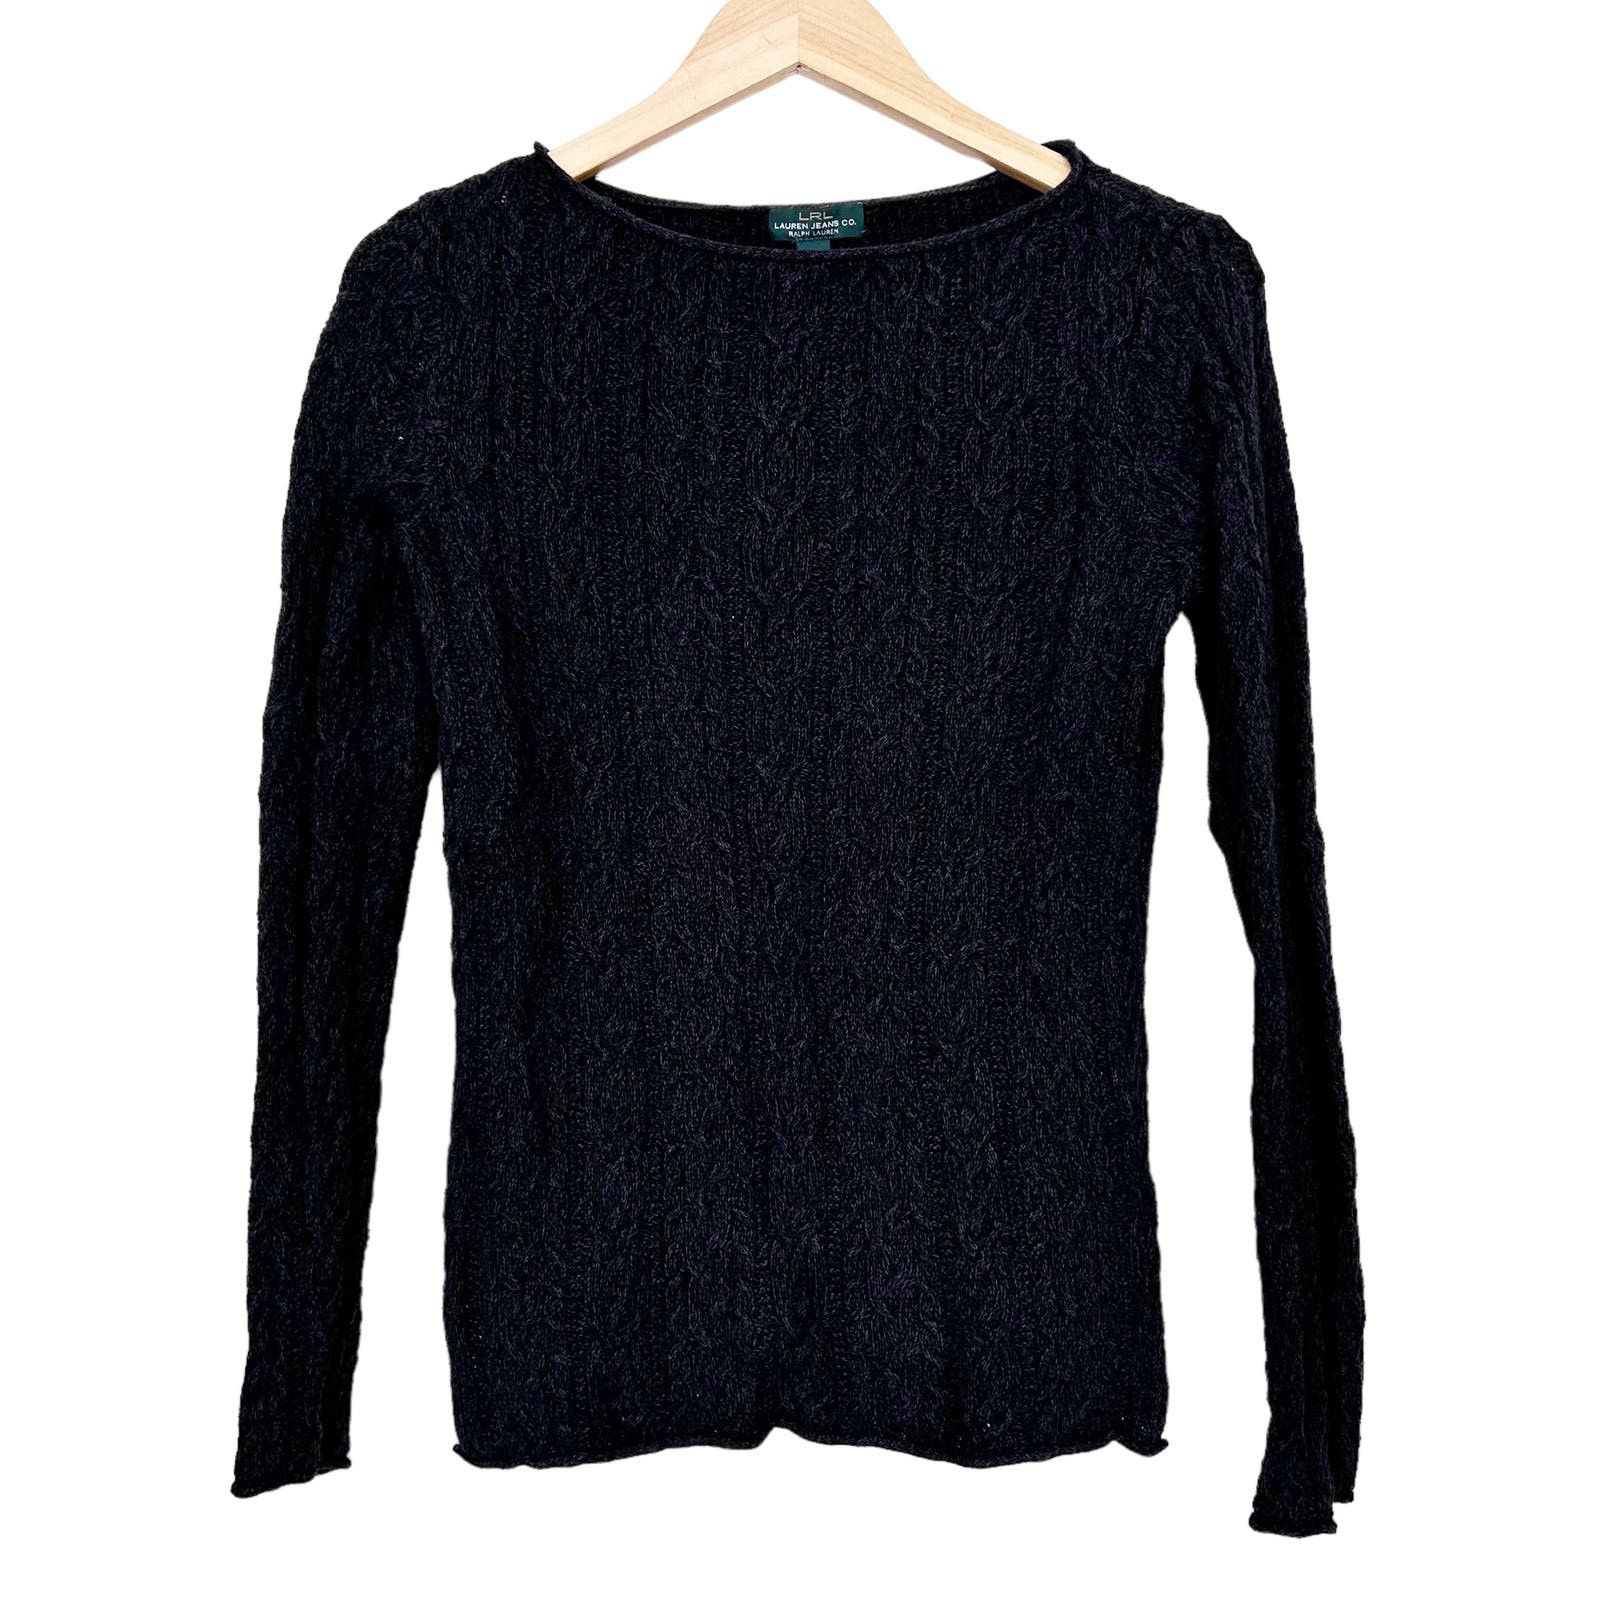 Ralph Lauren LRL Ralph Lauren Dark Gray Cable Knit Sweater Sz S Size S / US 4 / IT 40 - 4 Thumbnail